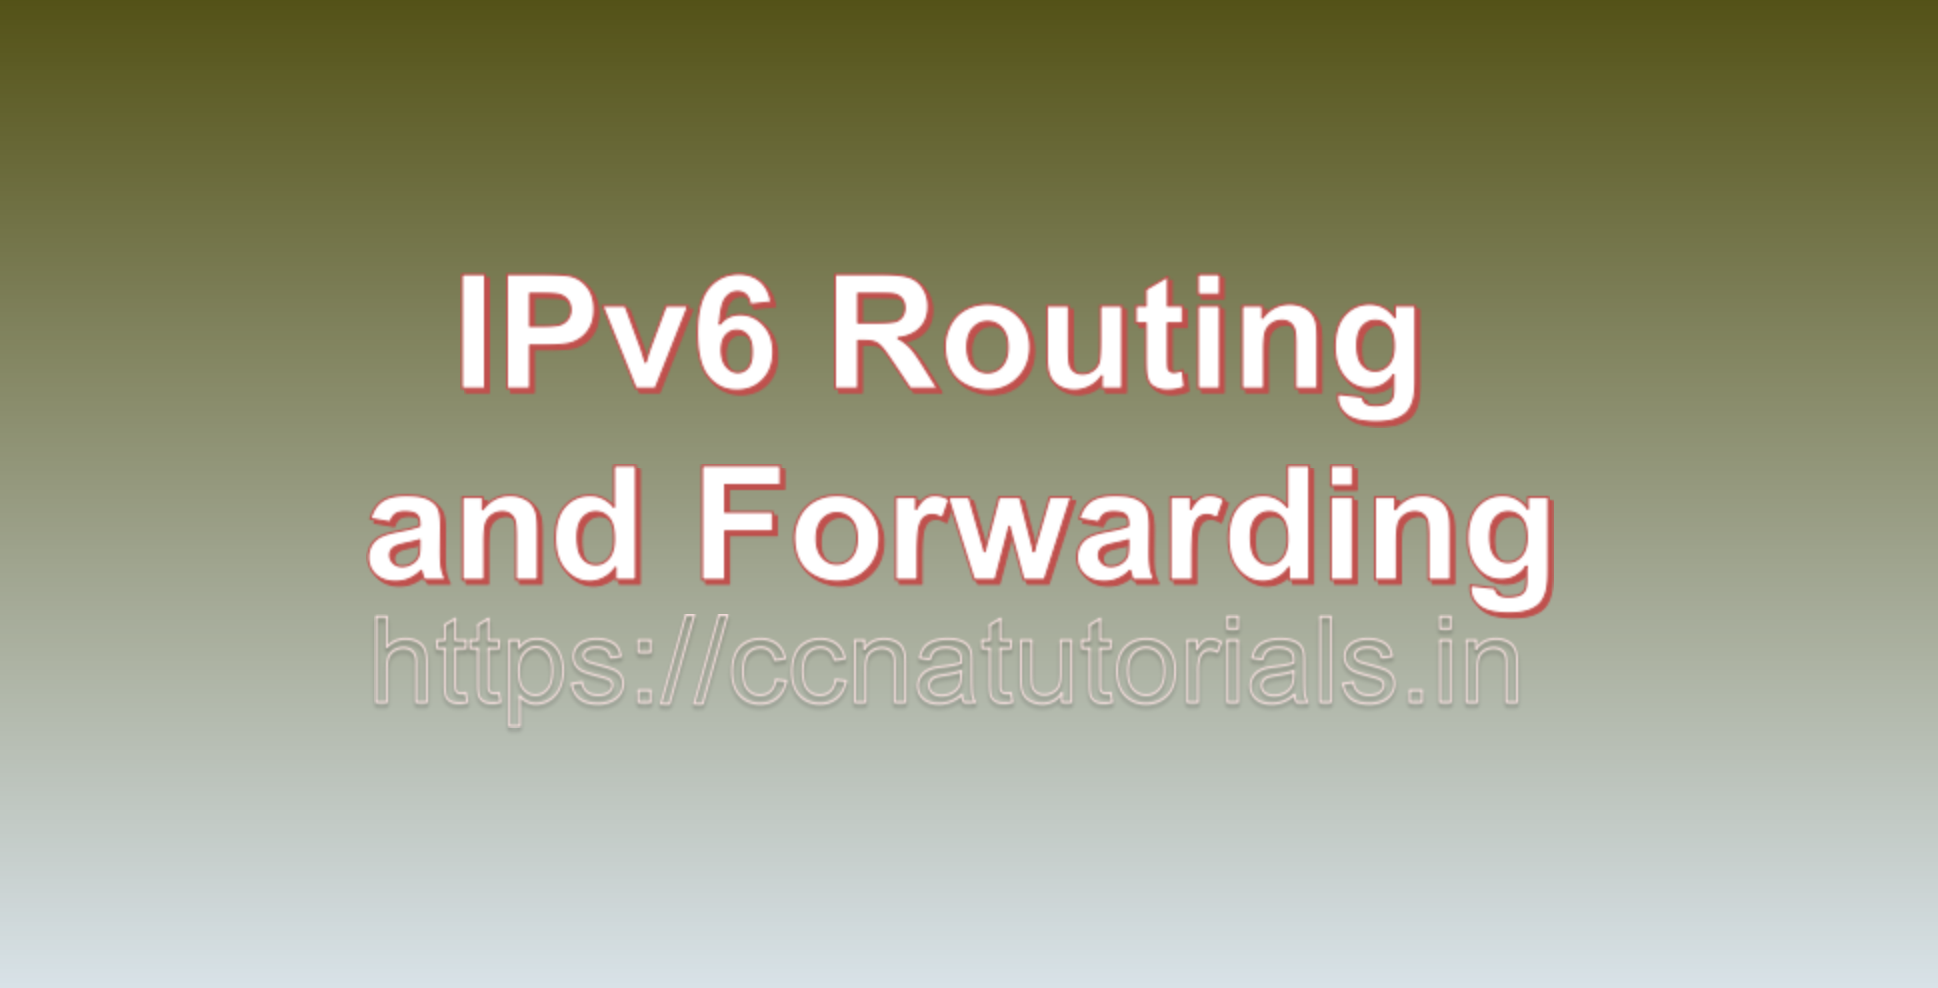 IPv6 Routing and Forwarding, ccna, ccna tutorials